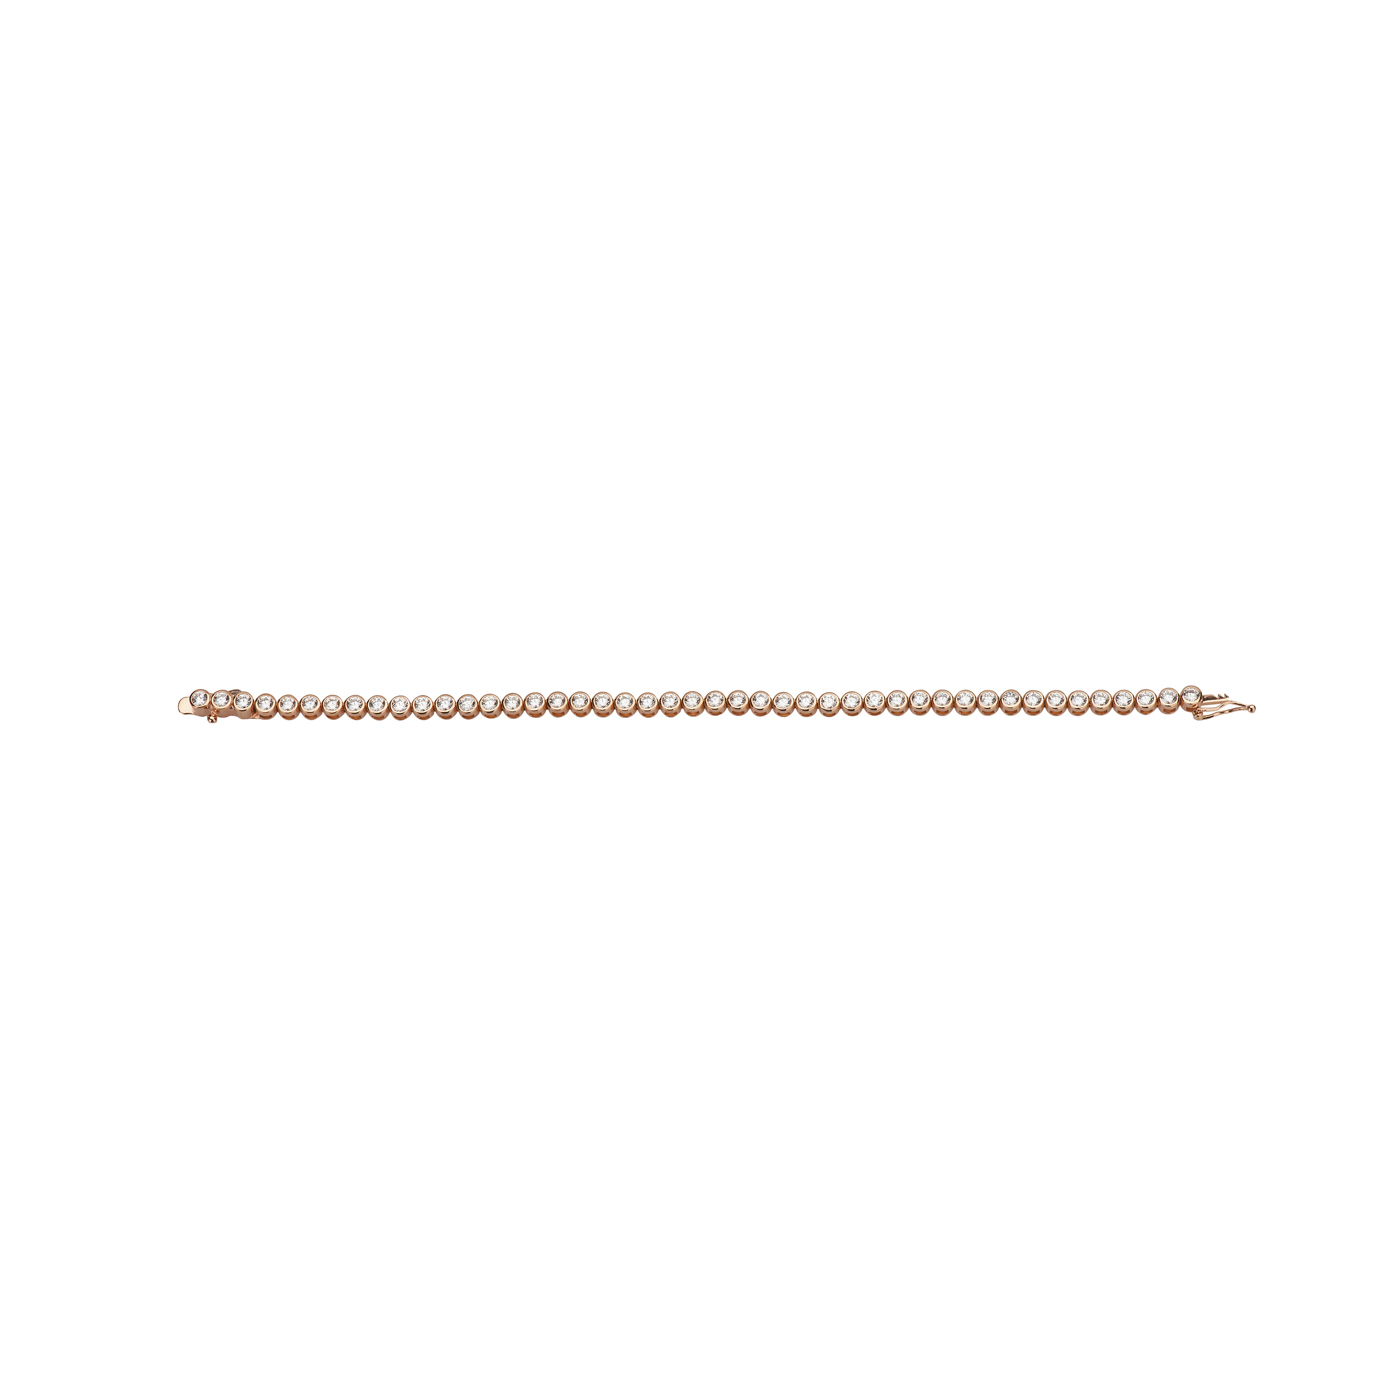 Bracelet, 925Ag Rosé Gold-Plated, Length 19 cm, w/ Zirconia - 1 piece